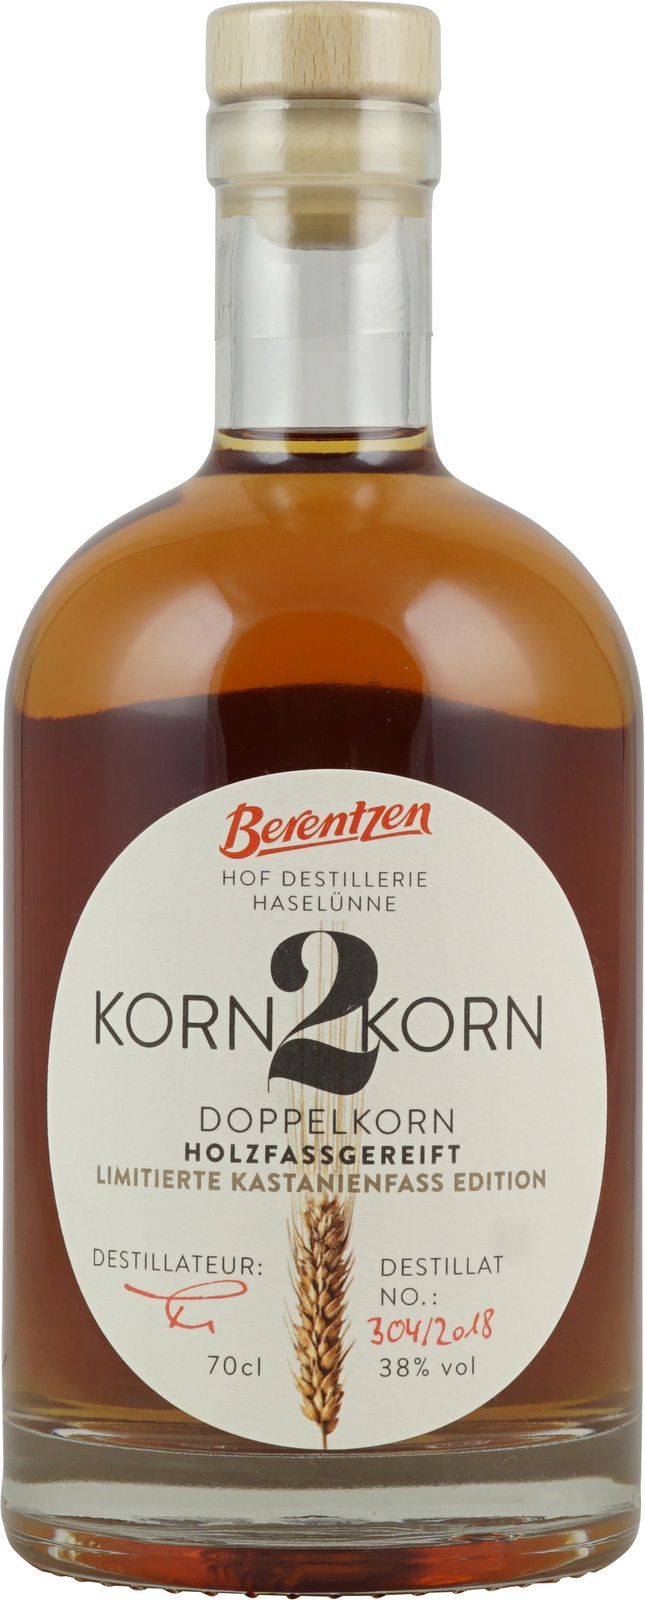 Korn2Korn Kastanie % Liter 38 K im 0,7 Vol., Doppelkorn